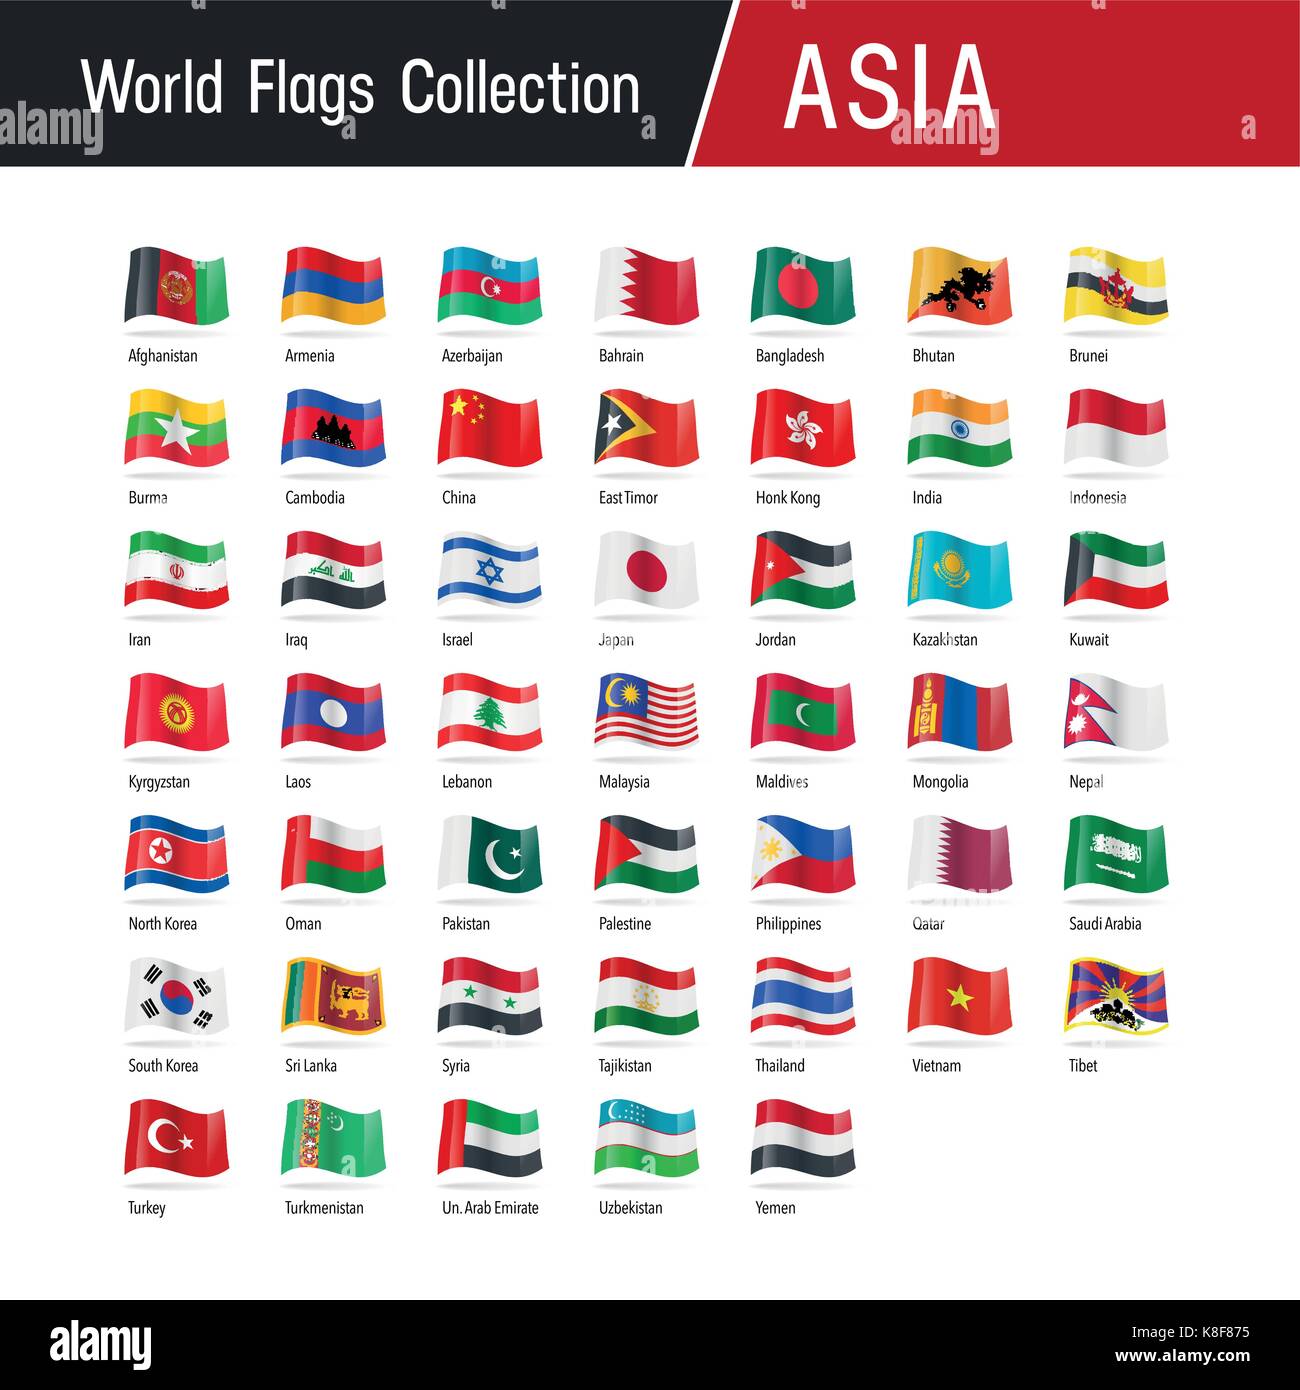 Flaggen Asien, winken im Wind - Vektor Welt Fahnen Sammlung Stock Vektor